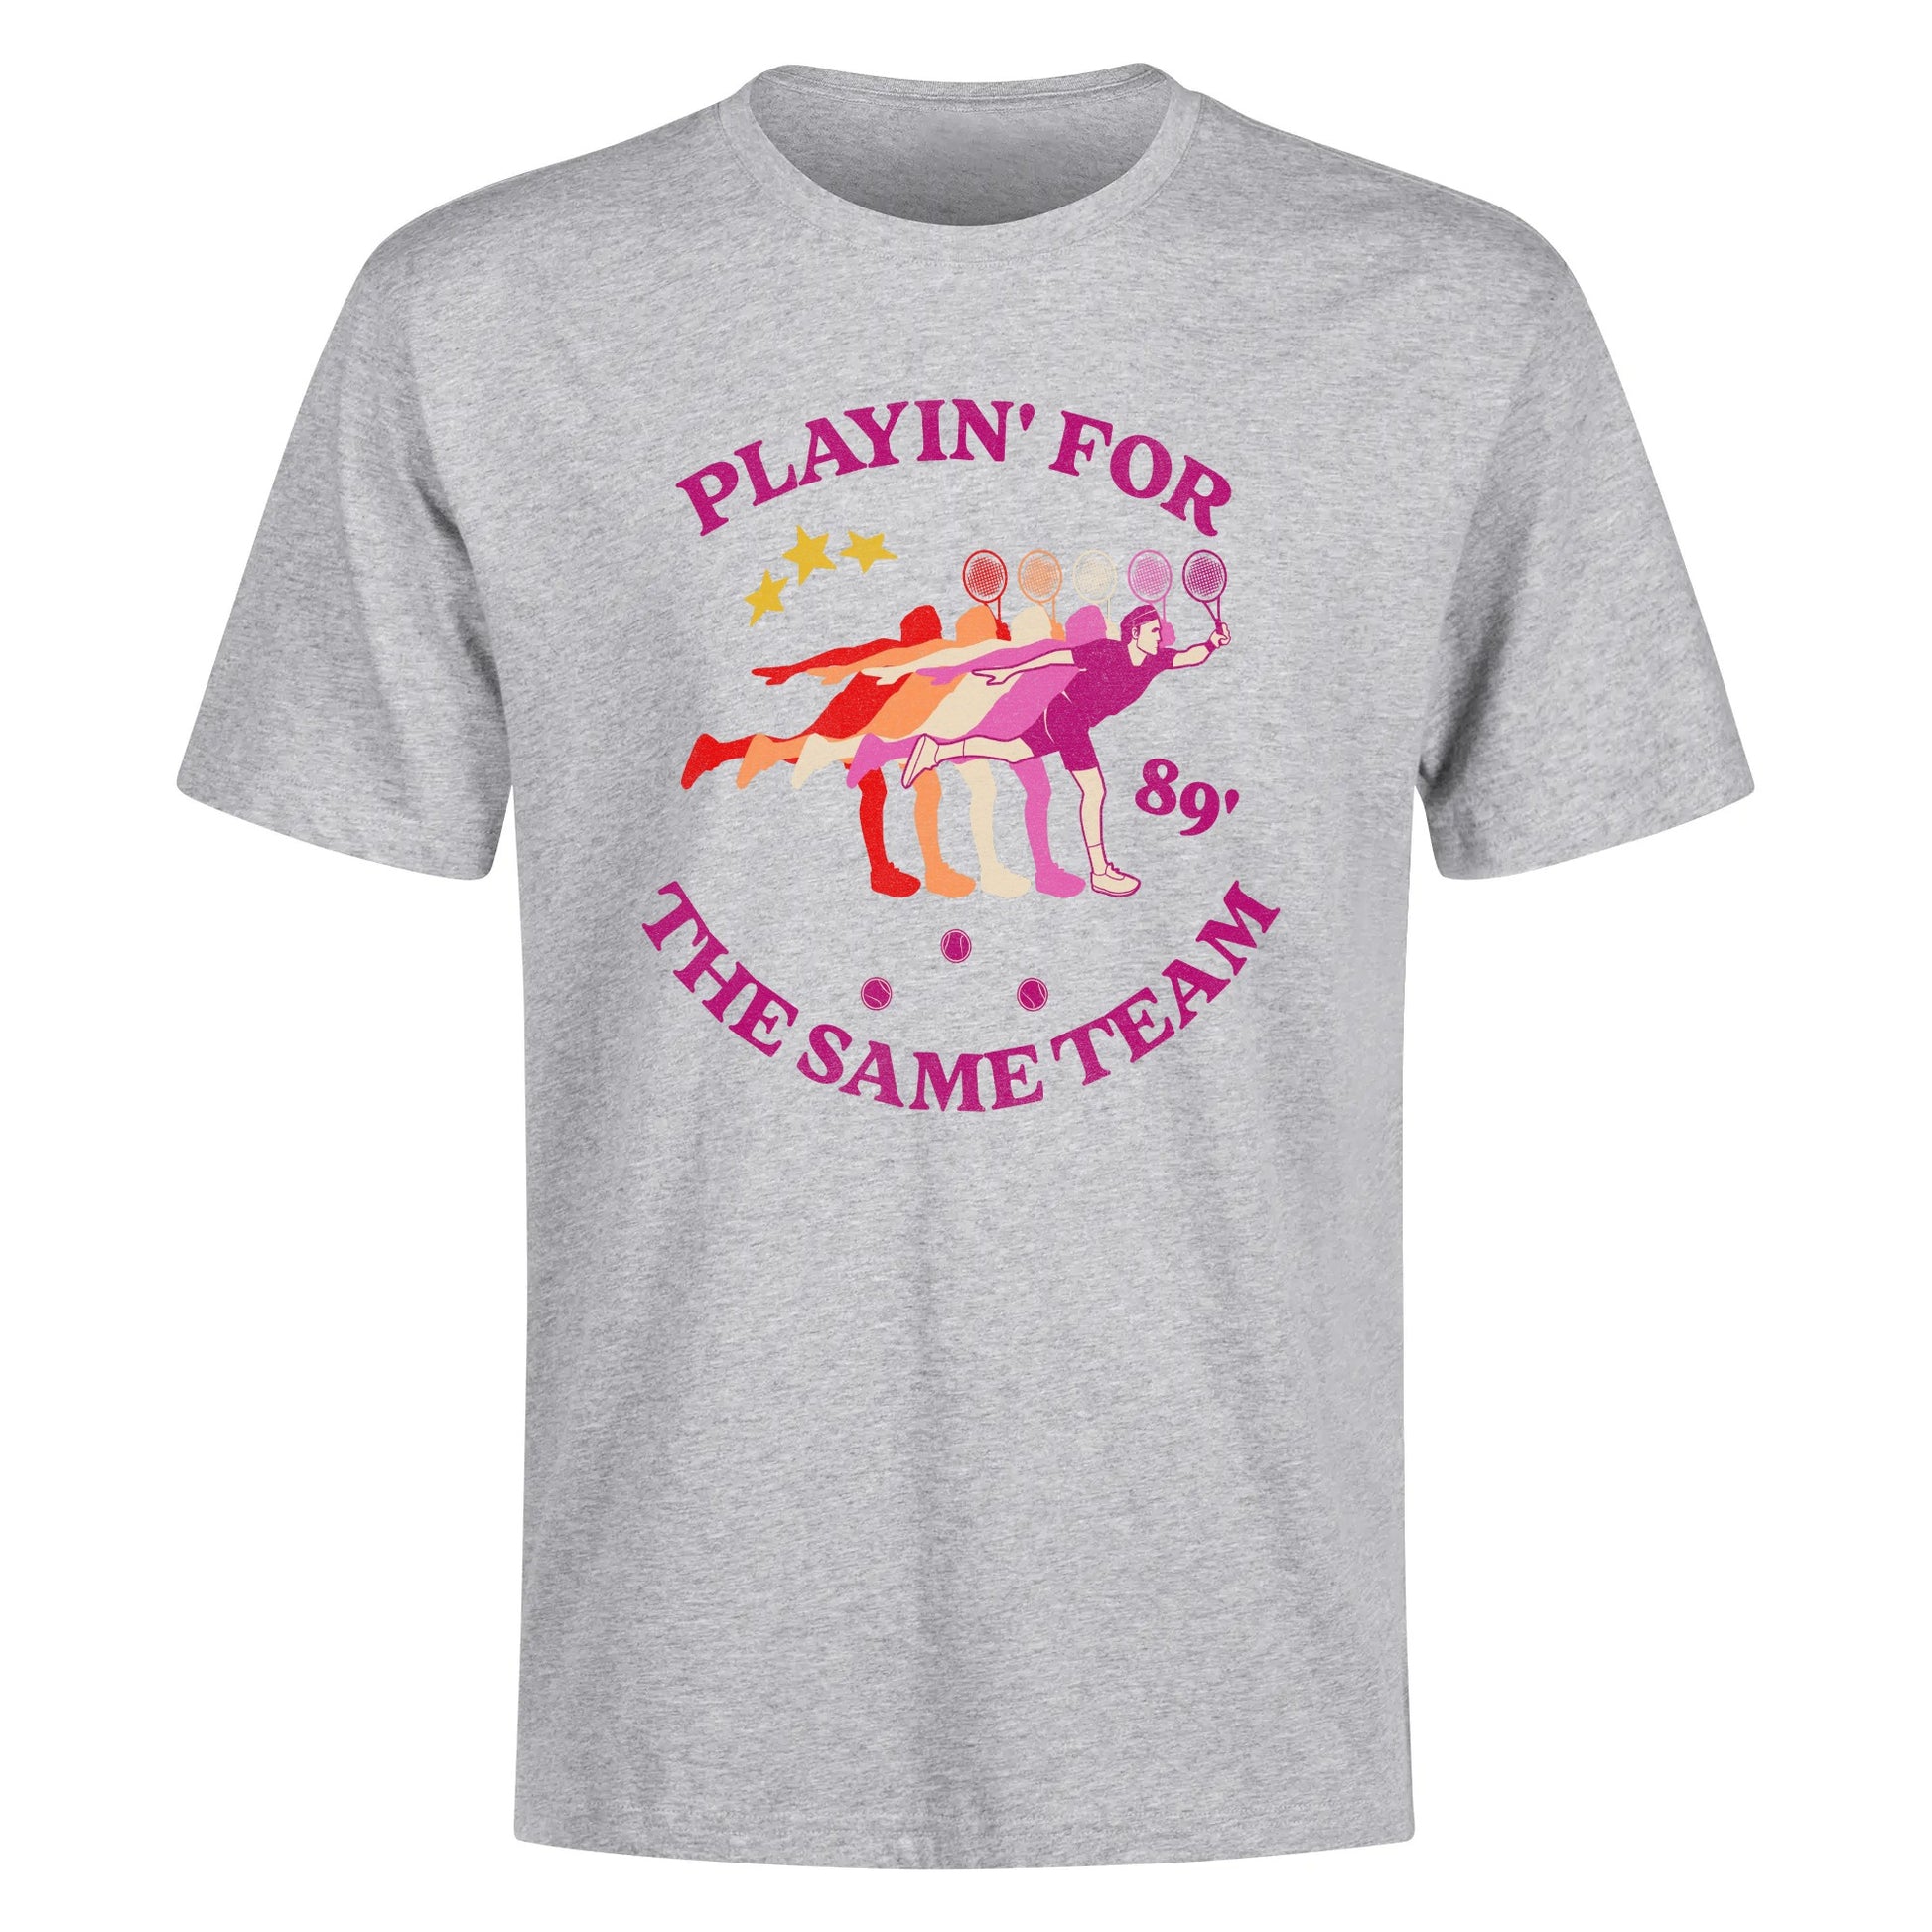 Same Team Lesbian Pride T-Shirt - Rose Gold Co. Shop